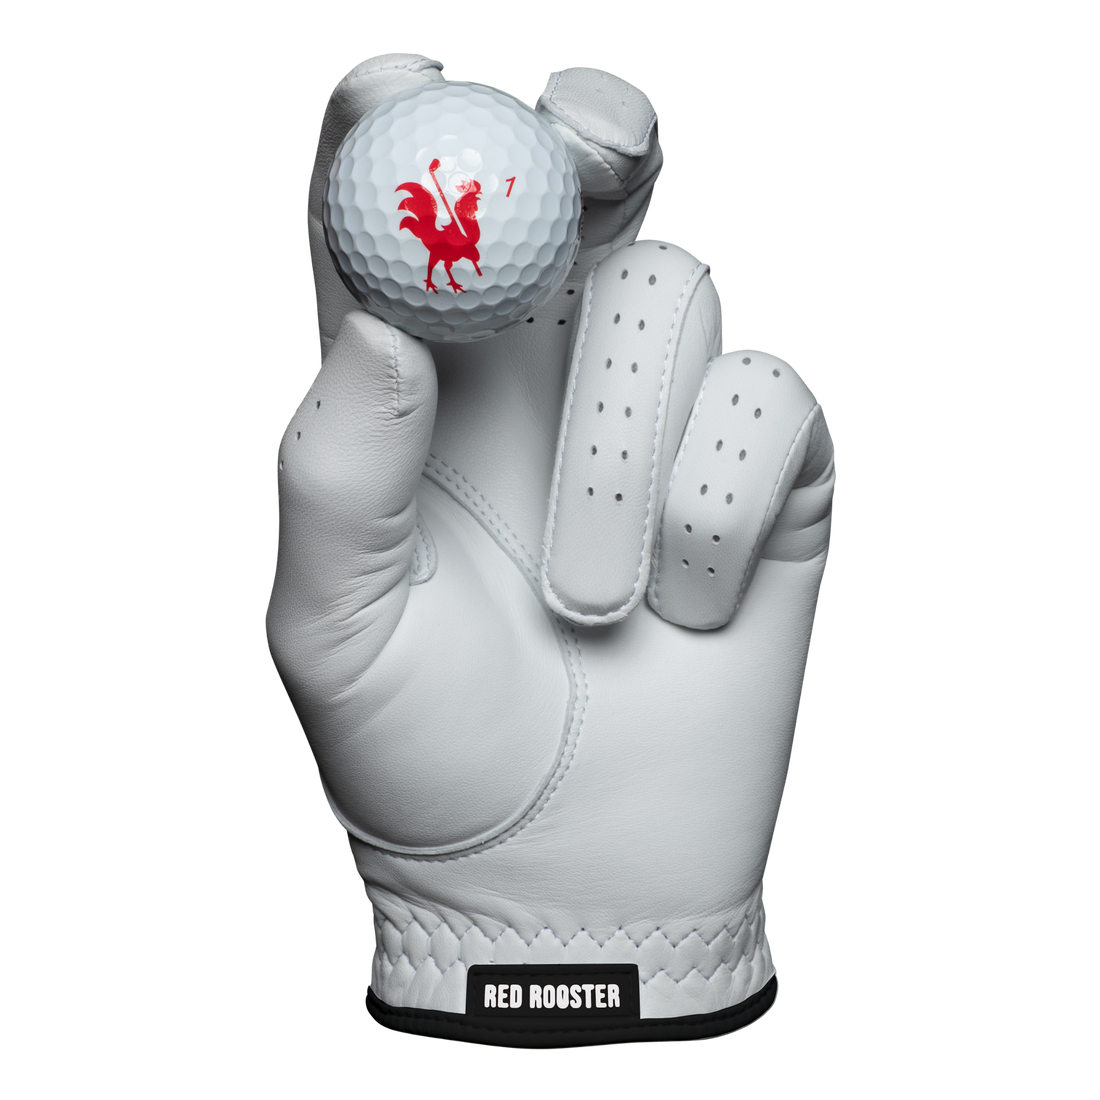 The MarQsman golf glove holding golf ball